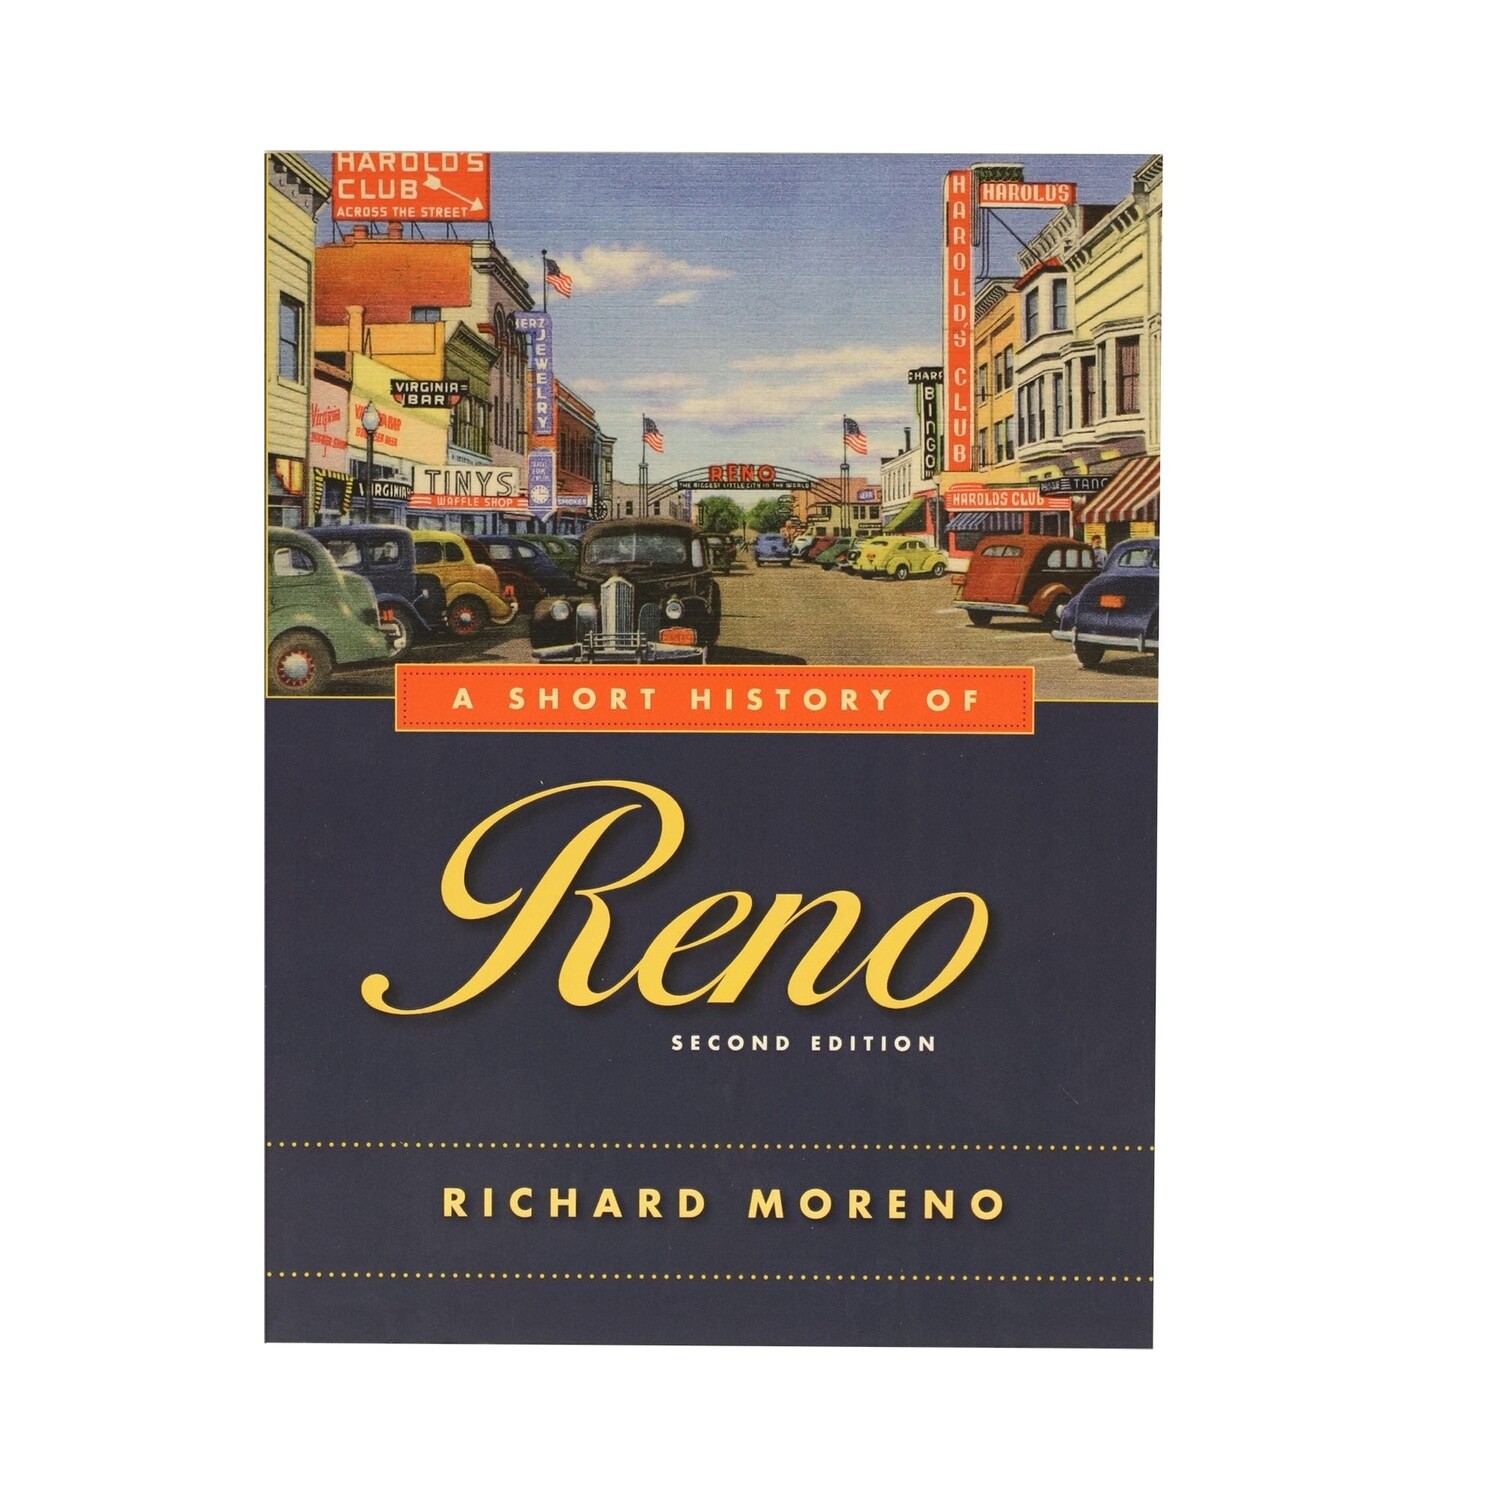 A Short History of Reno, Second Edition by Richard Moreno